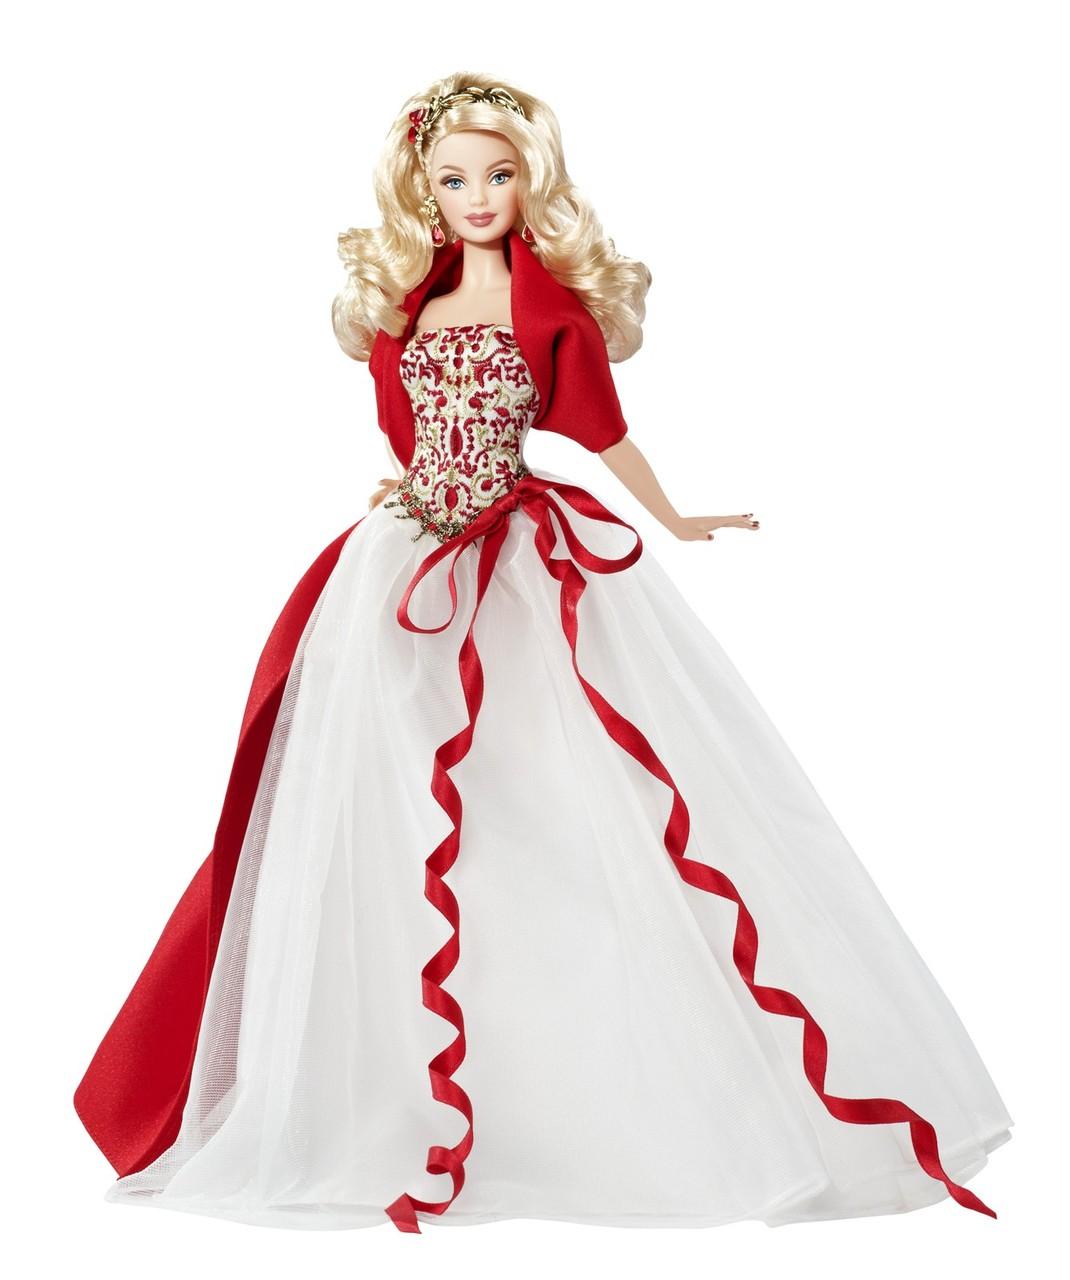 Free download Beautiful Wallpaper Barbie Doll HD Wallpaper